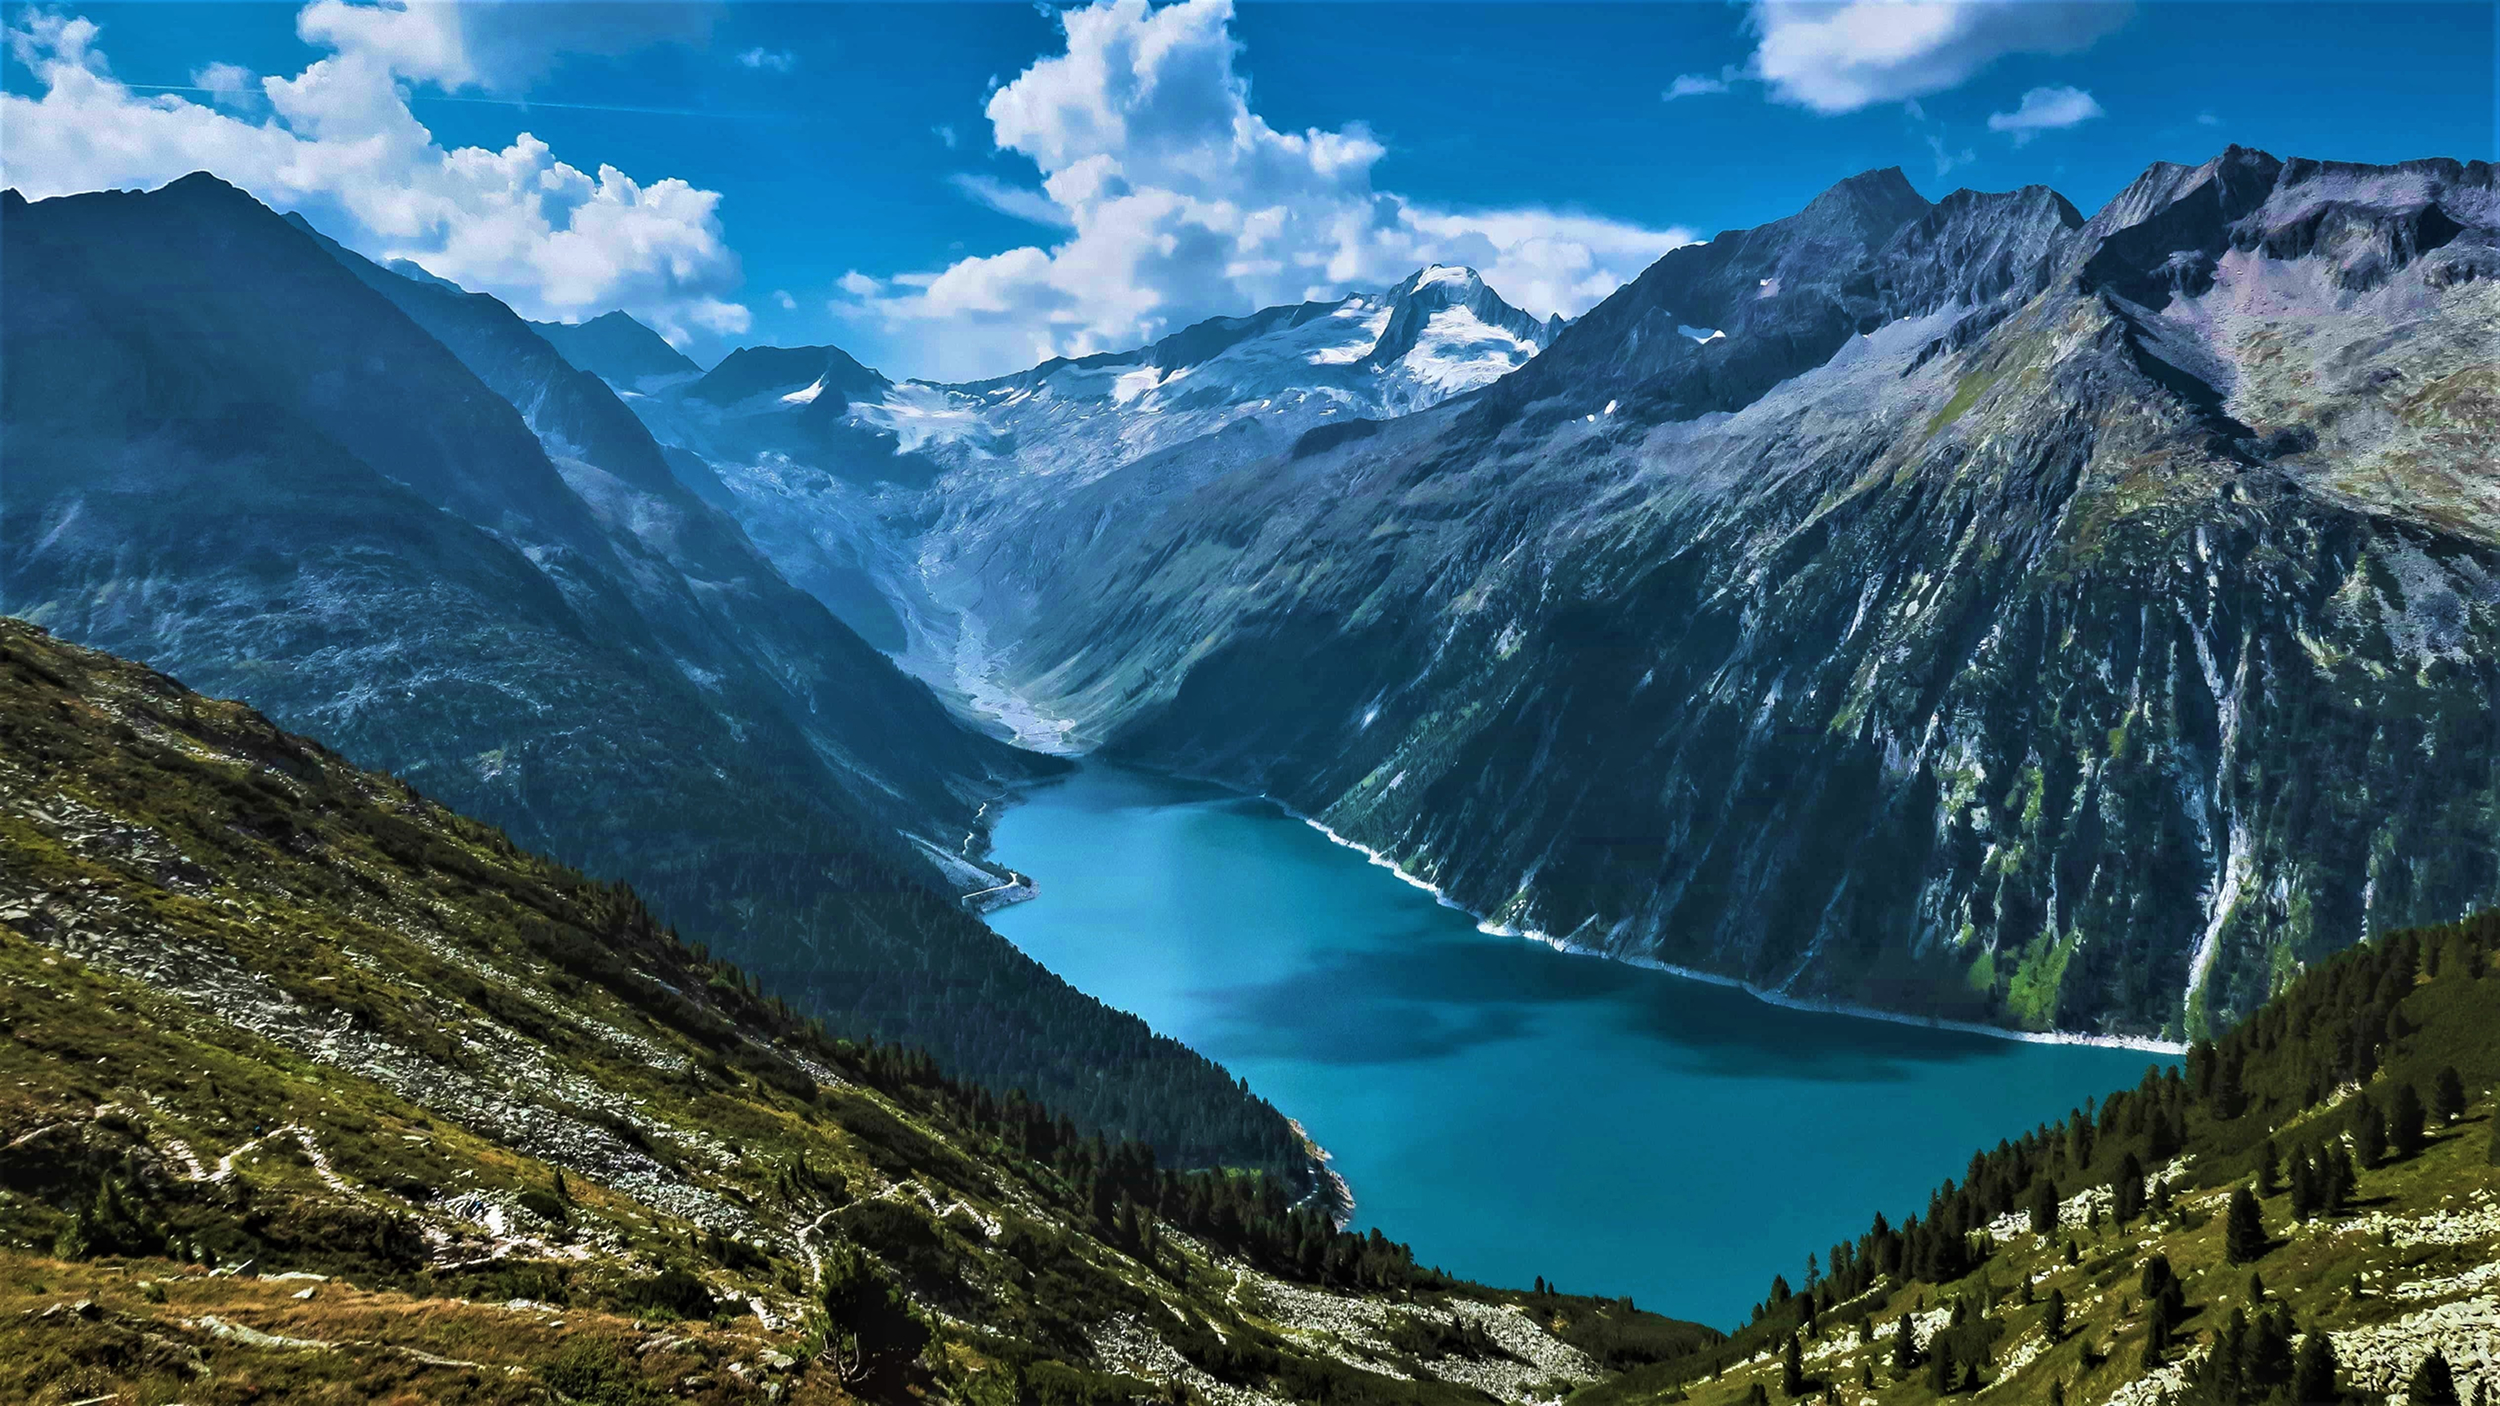 876174 Bild herunterladen norwegen, erde/natur, fjord, gebirge - Hintergrundbilder und Bildschirmschoner kostenlos